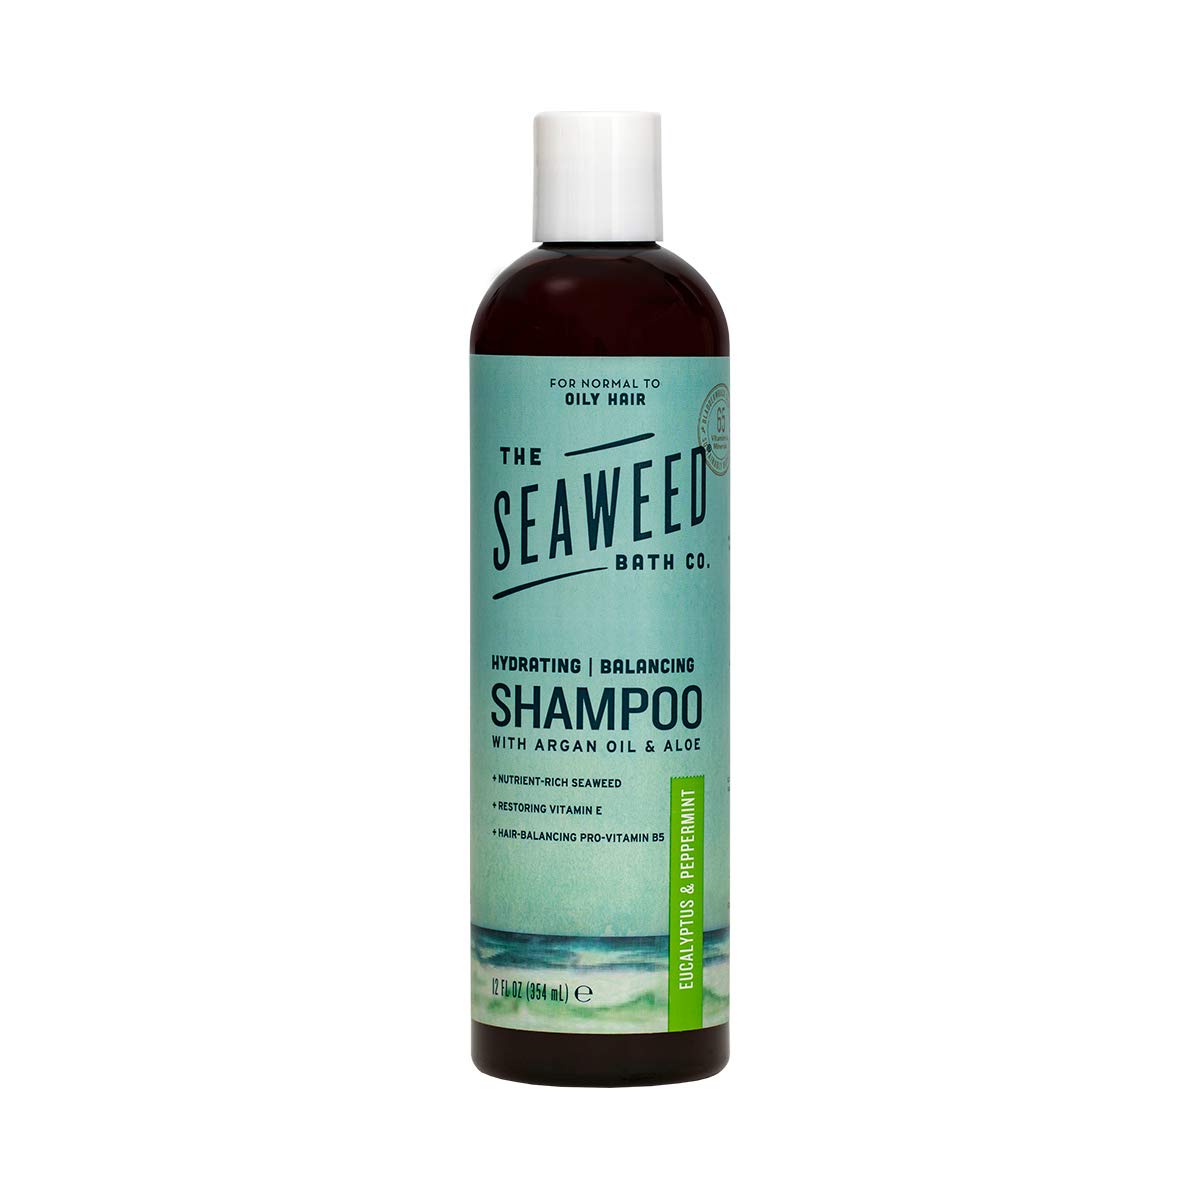 Seaweed bath co shampoo